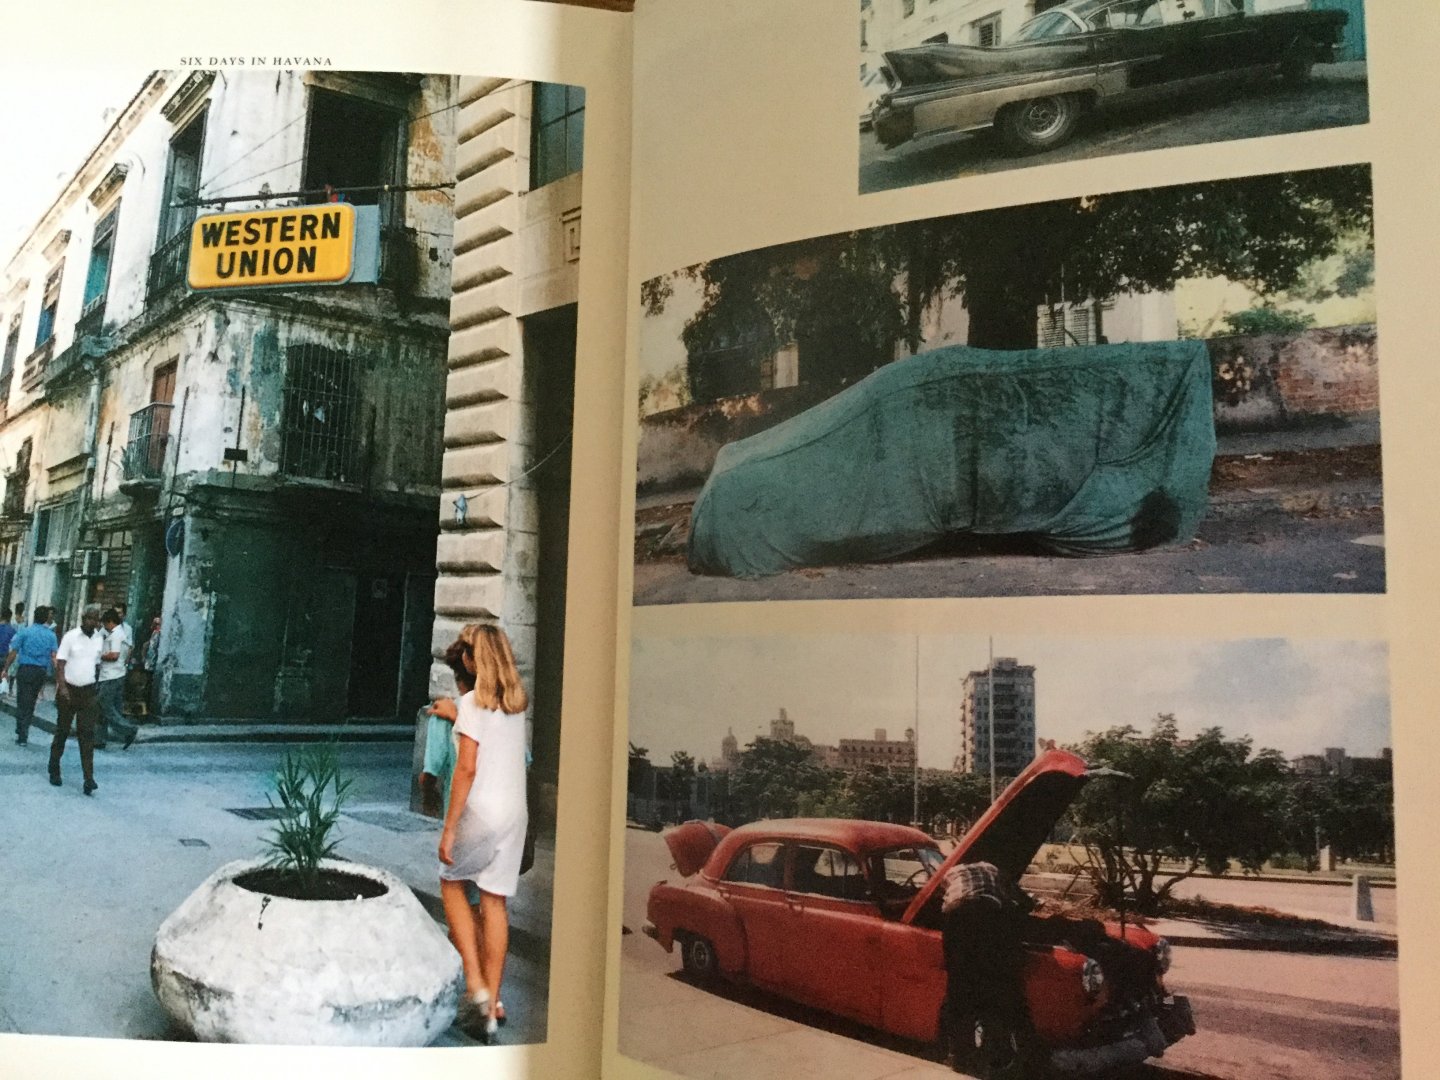 Michener, James & Kings, John (photos) - Six days in Havana